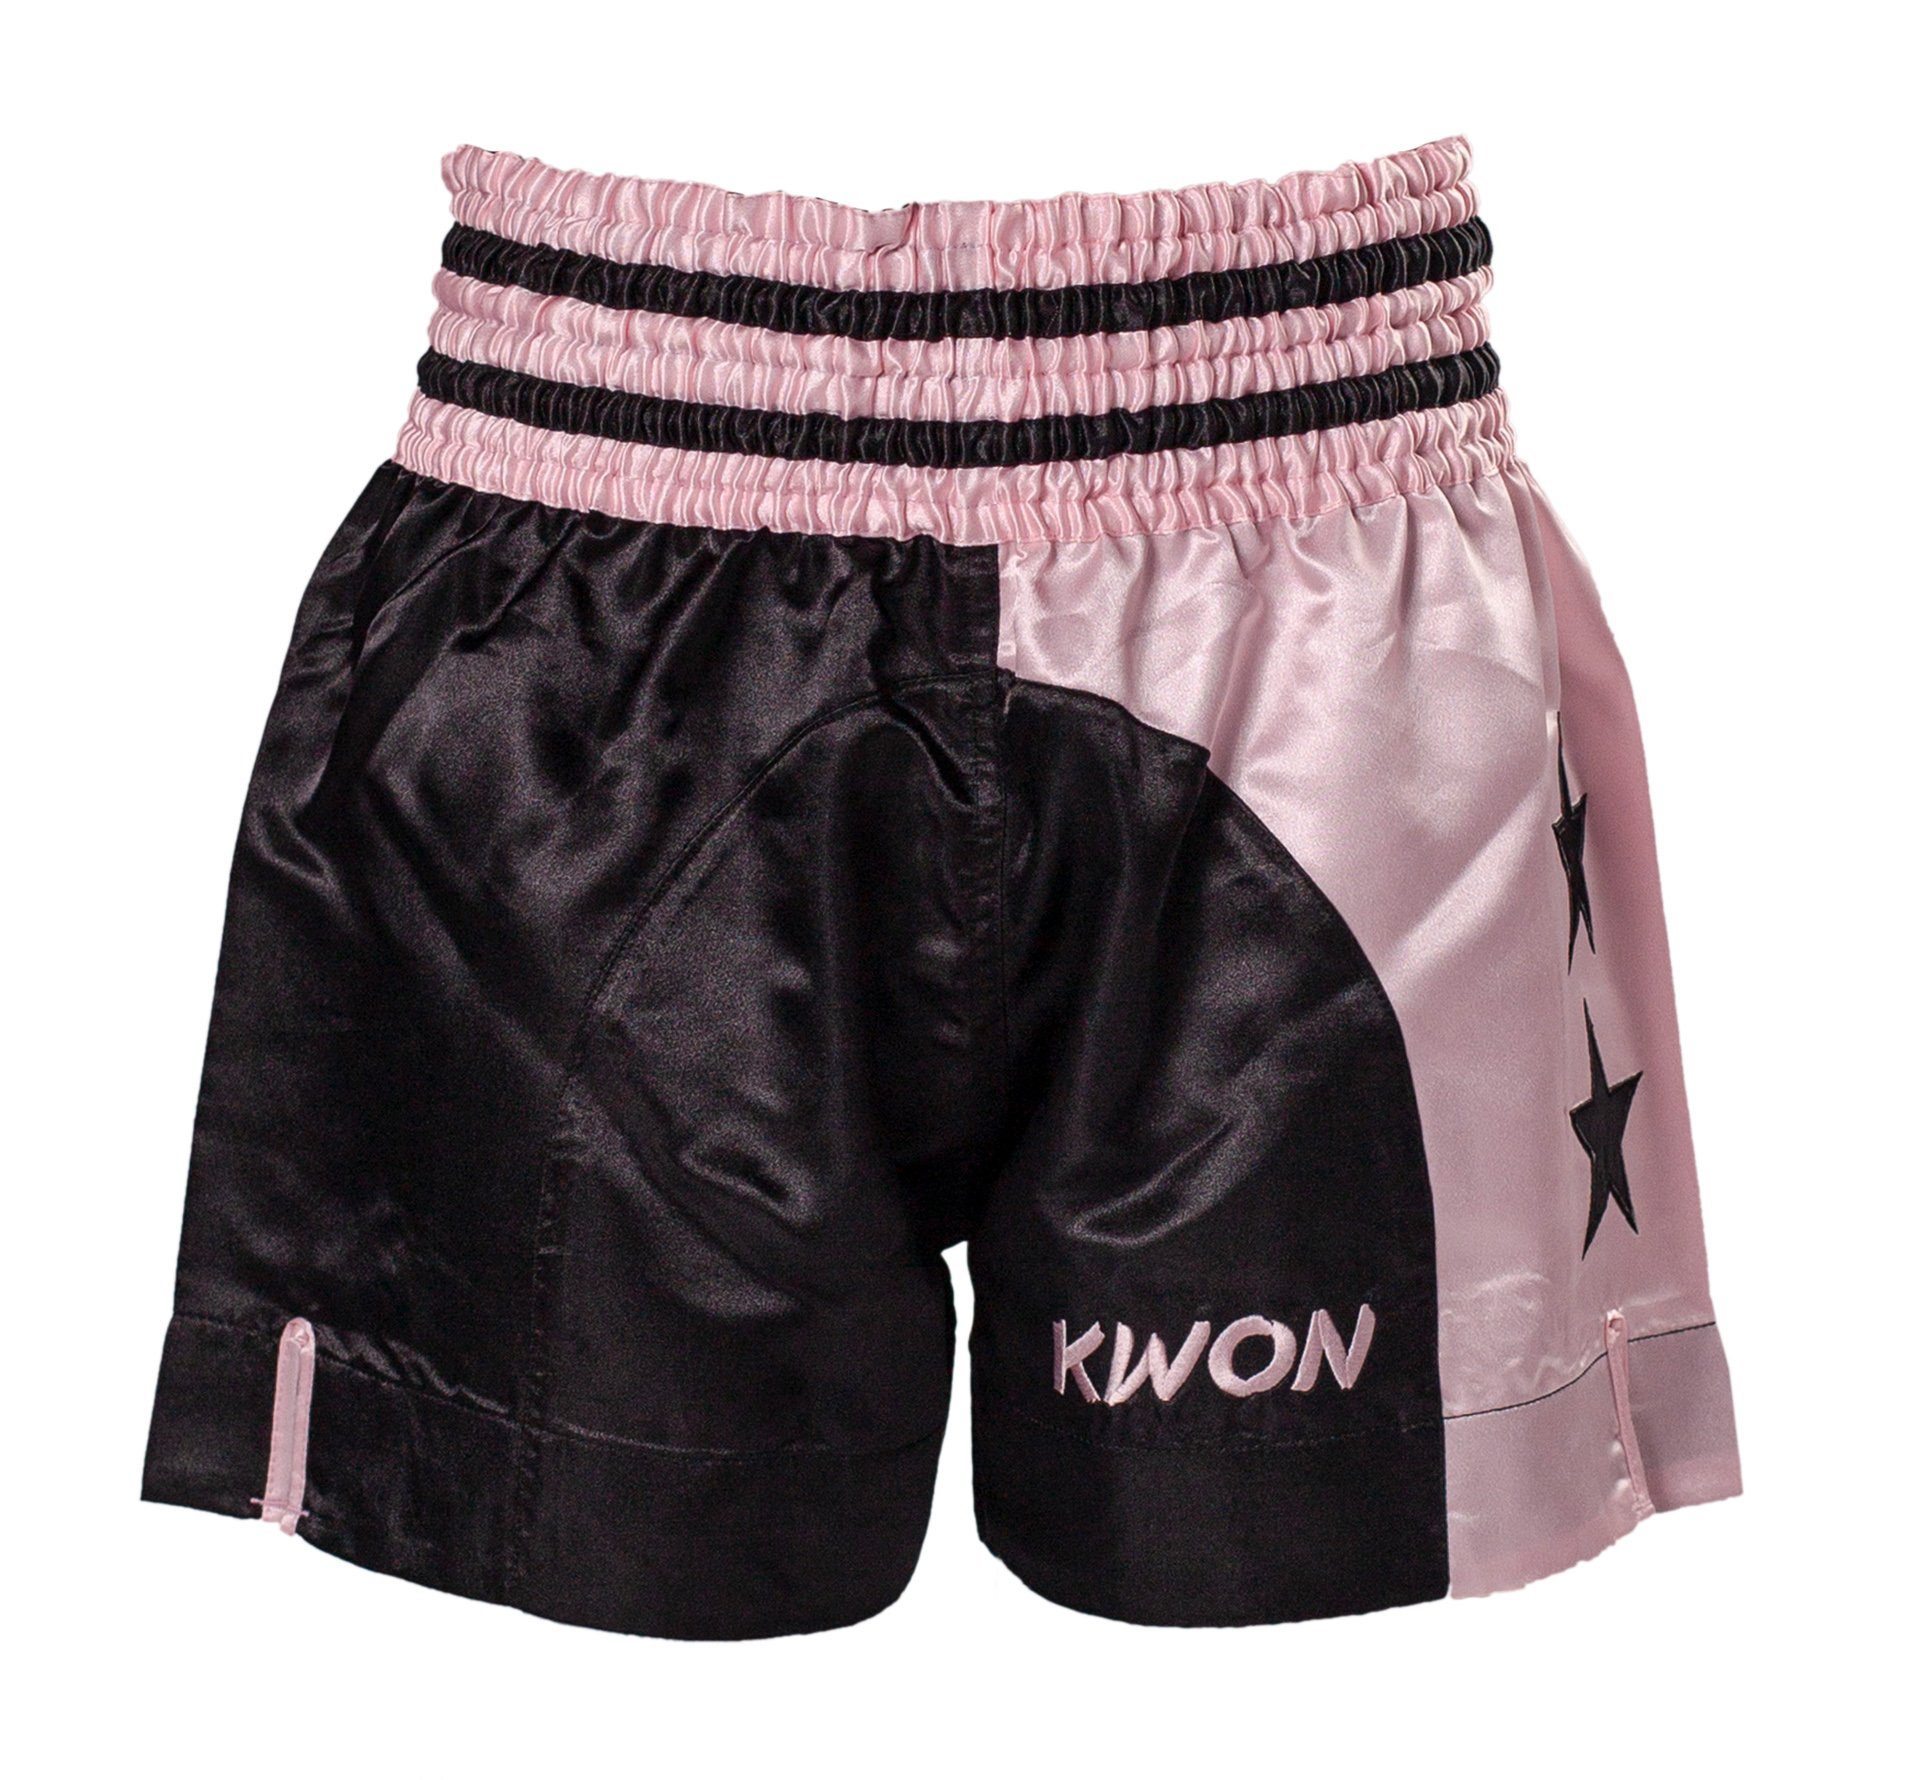 Box Muay Thaiboxhose rosa Shorts KWON Sterne Kickboxhose Sporthose (Edler MMA Thai kurz Damen Look) pink traditioneller Schnitt,